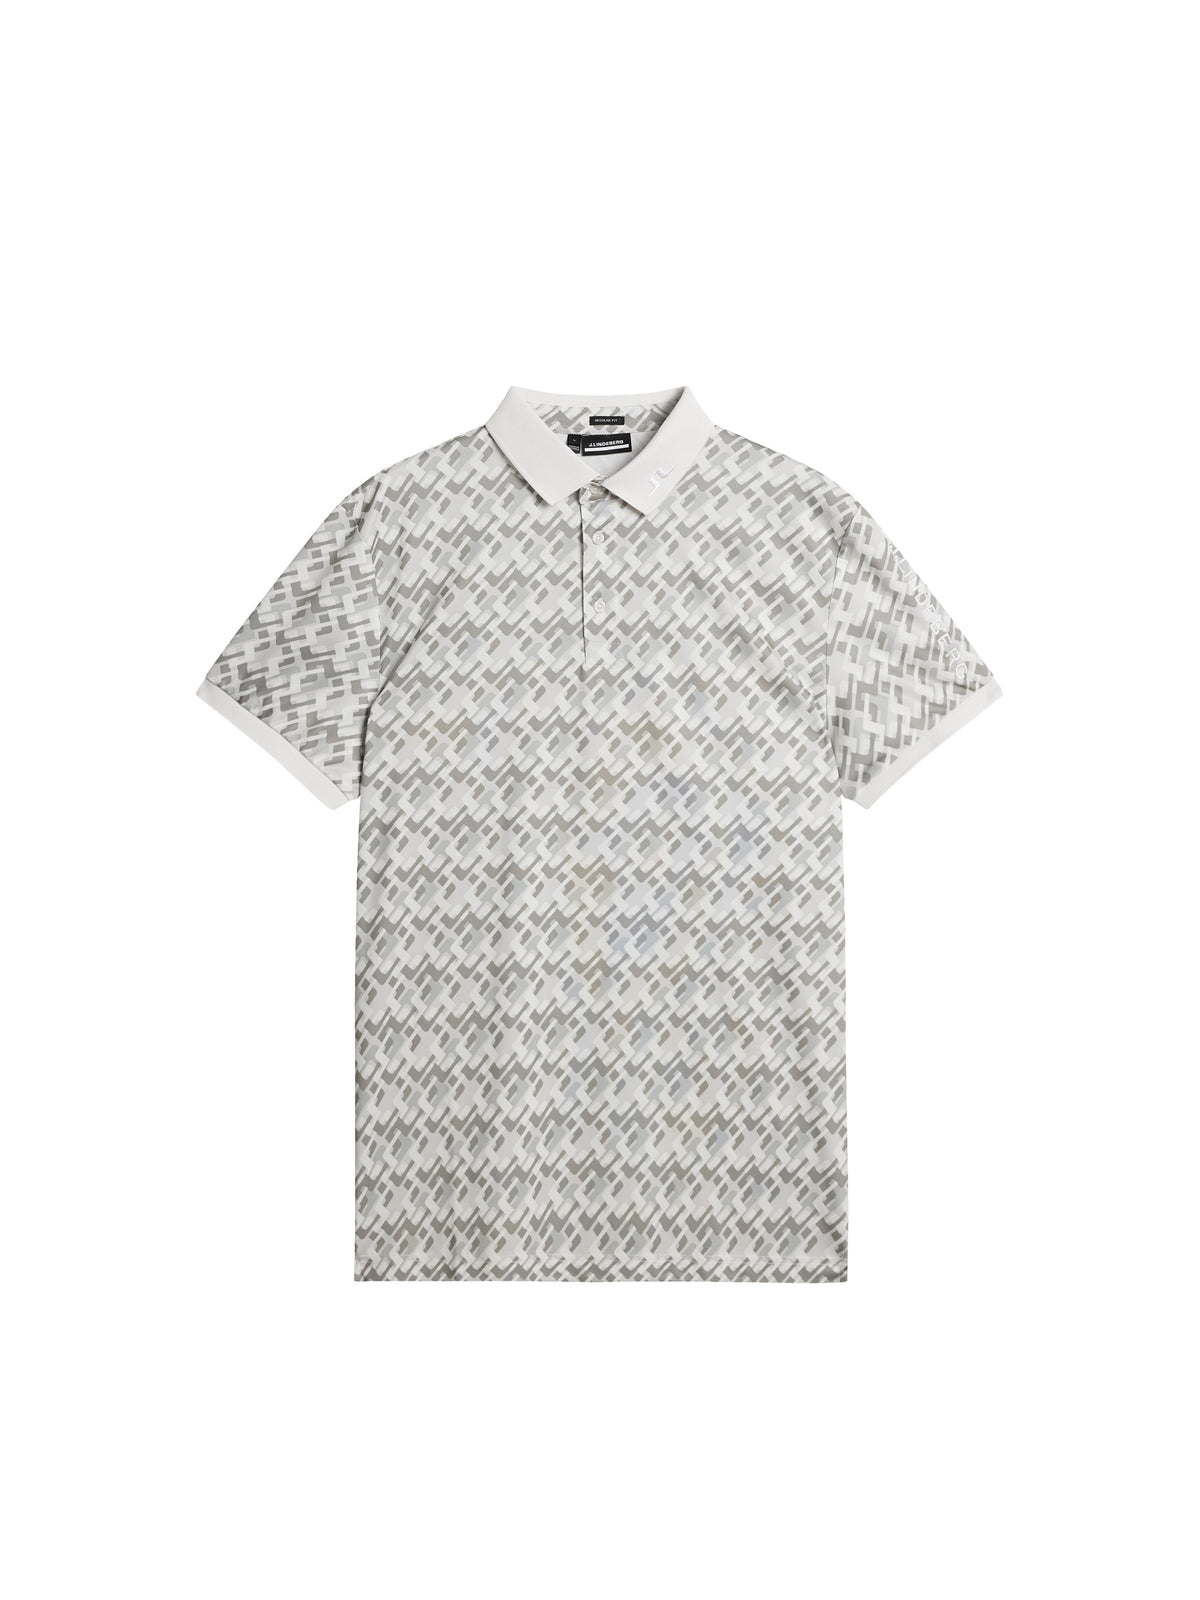 Louis Vuitton Slim Shirt with Micro Design White. Size 42